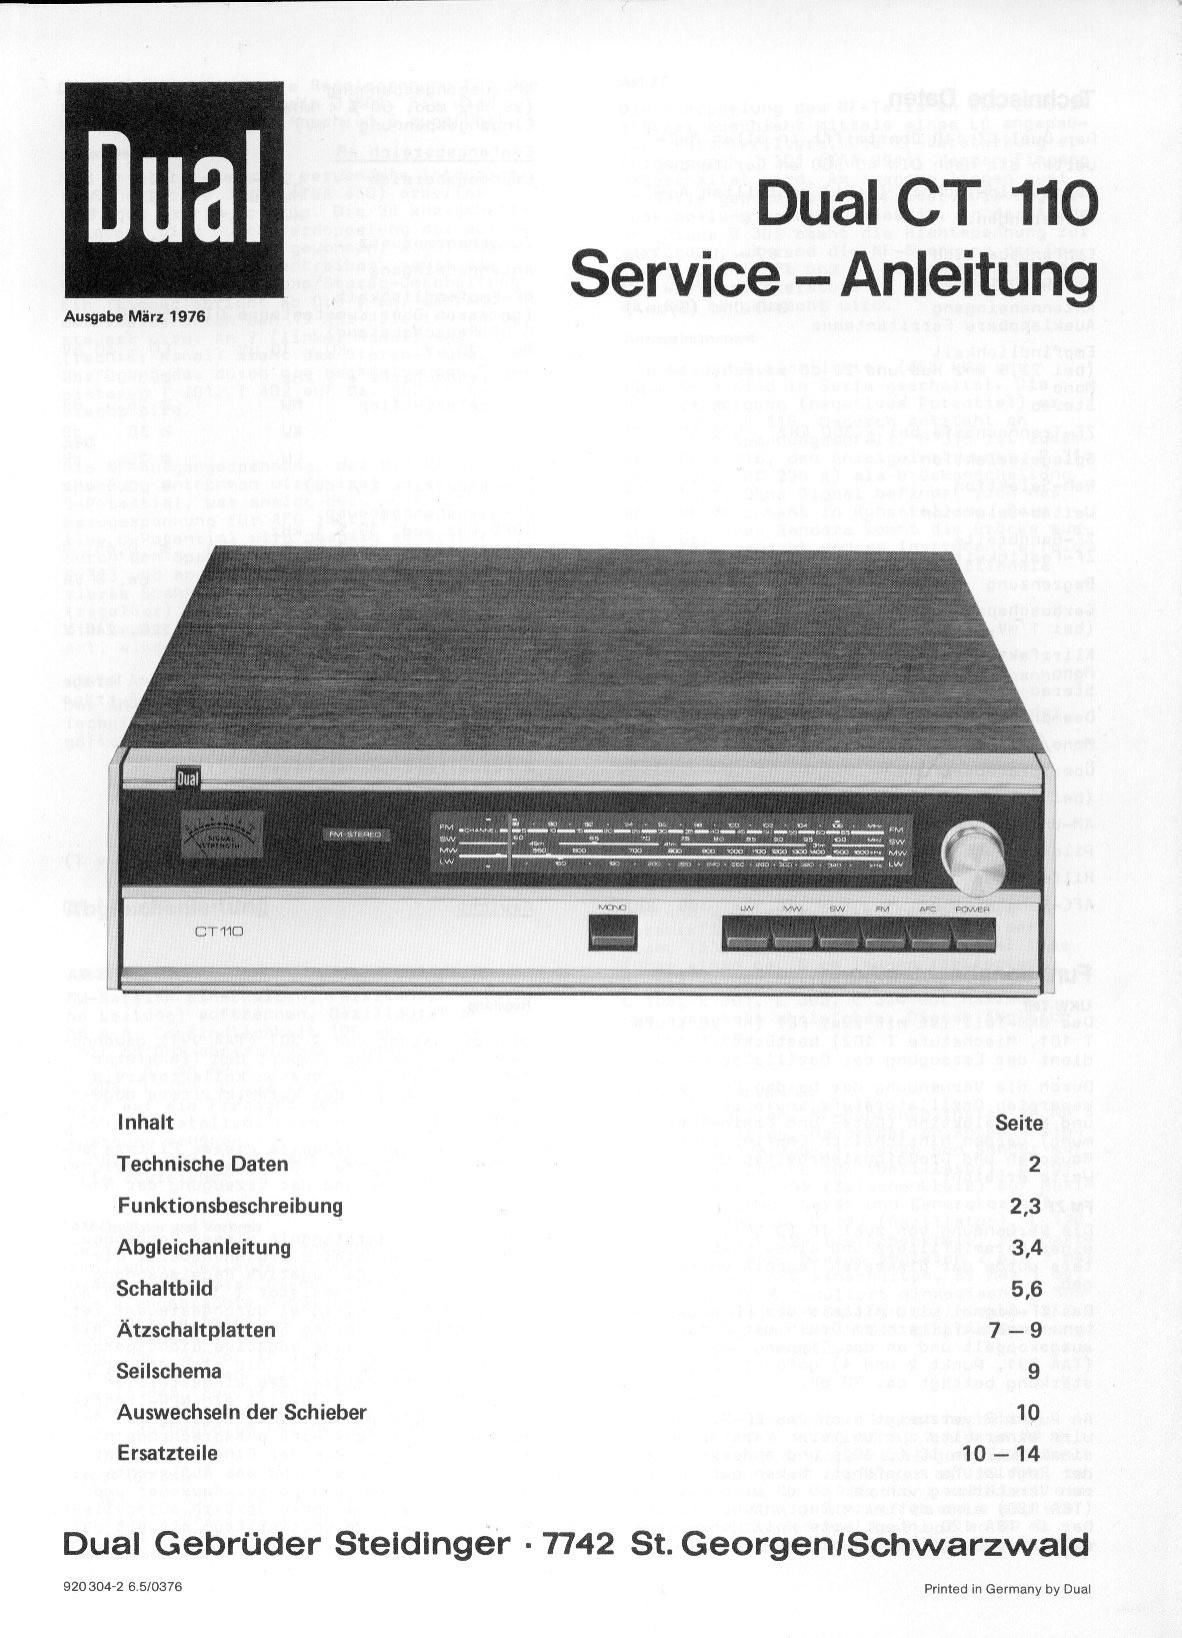 Dual CT 110 Service Manual